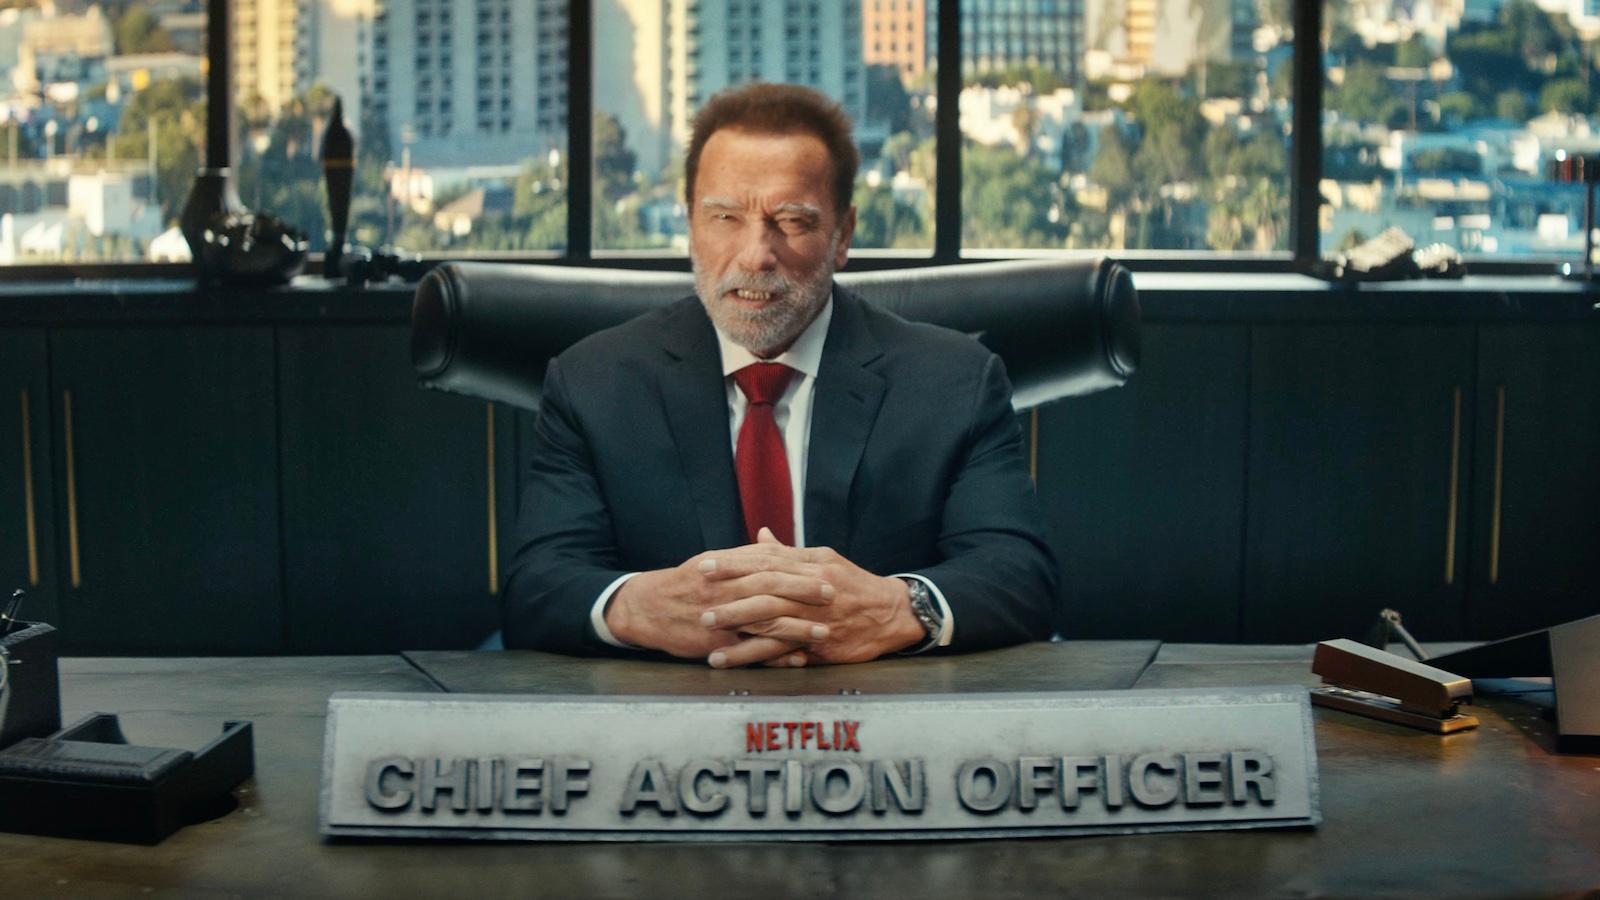 Arnold Schwarzenegger hired by Netflix